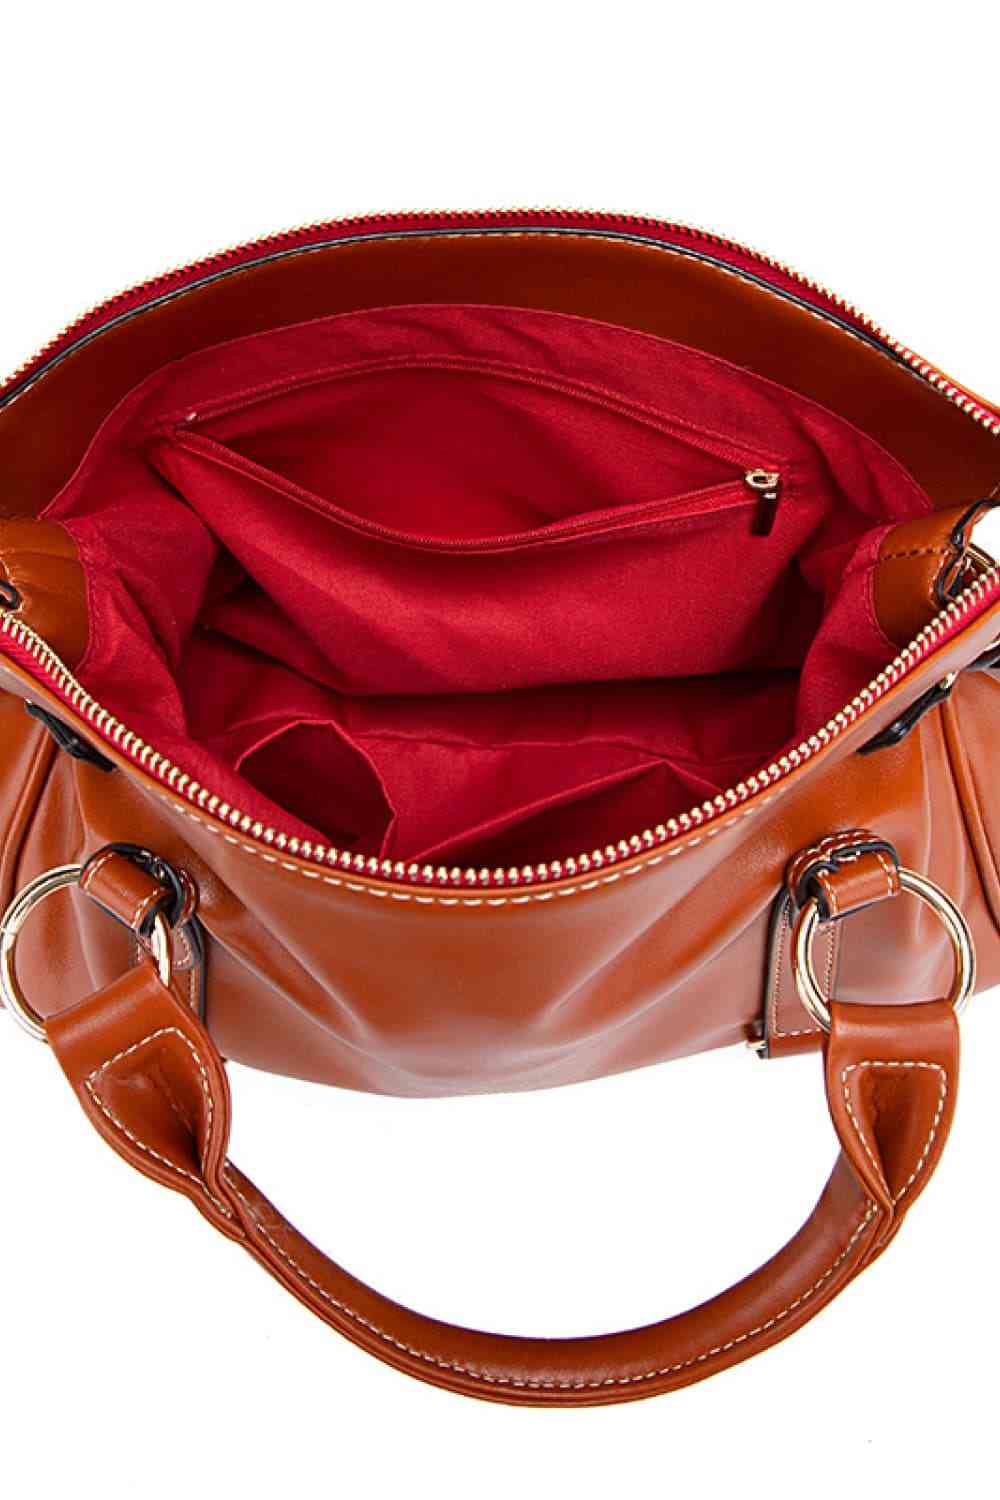 PU Leather Handbag with Tassels - TiffanyzKlozet